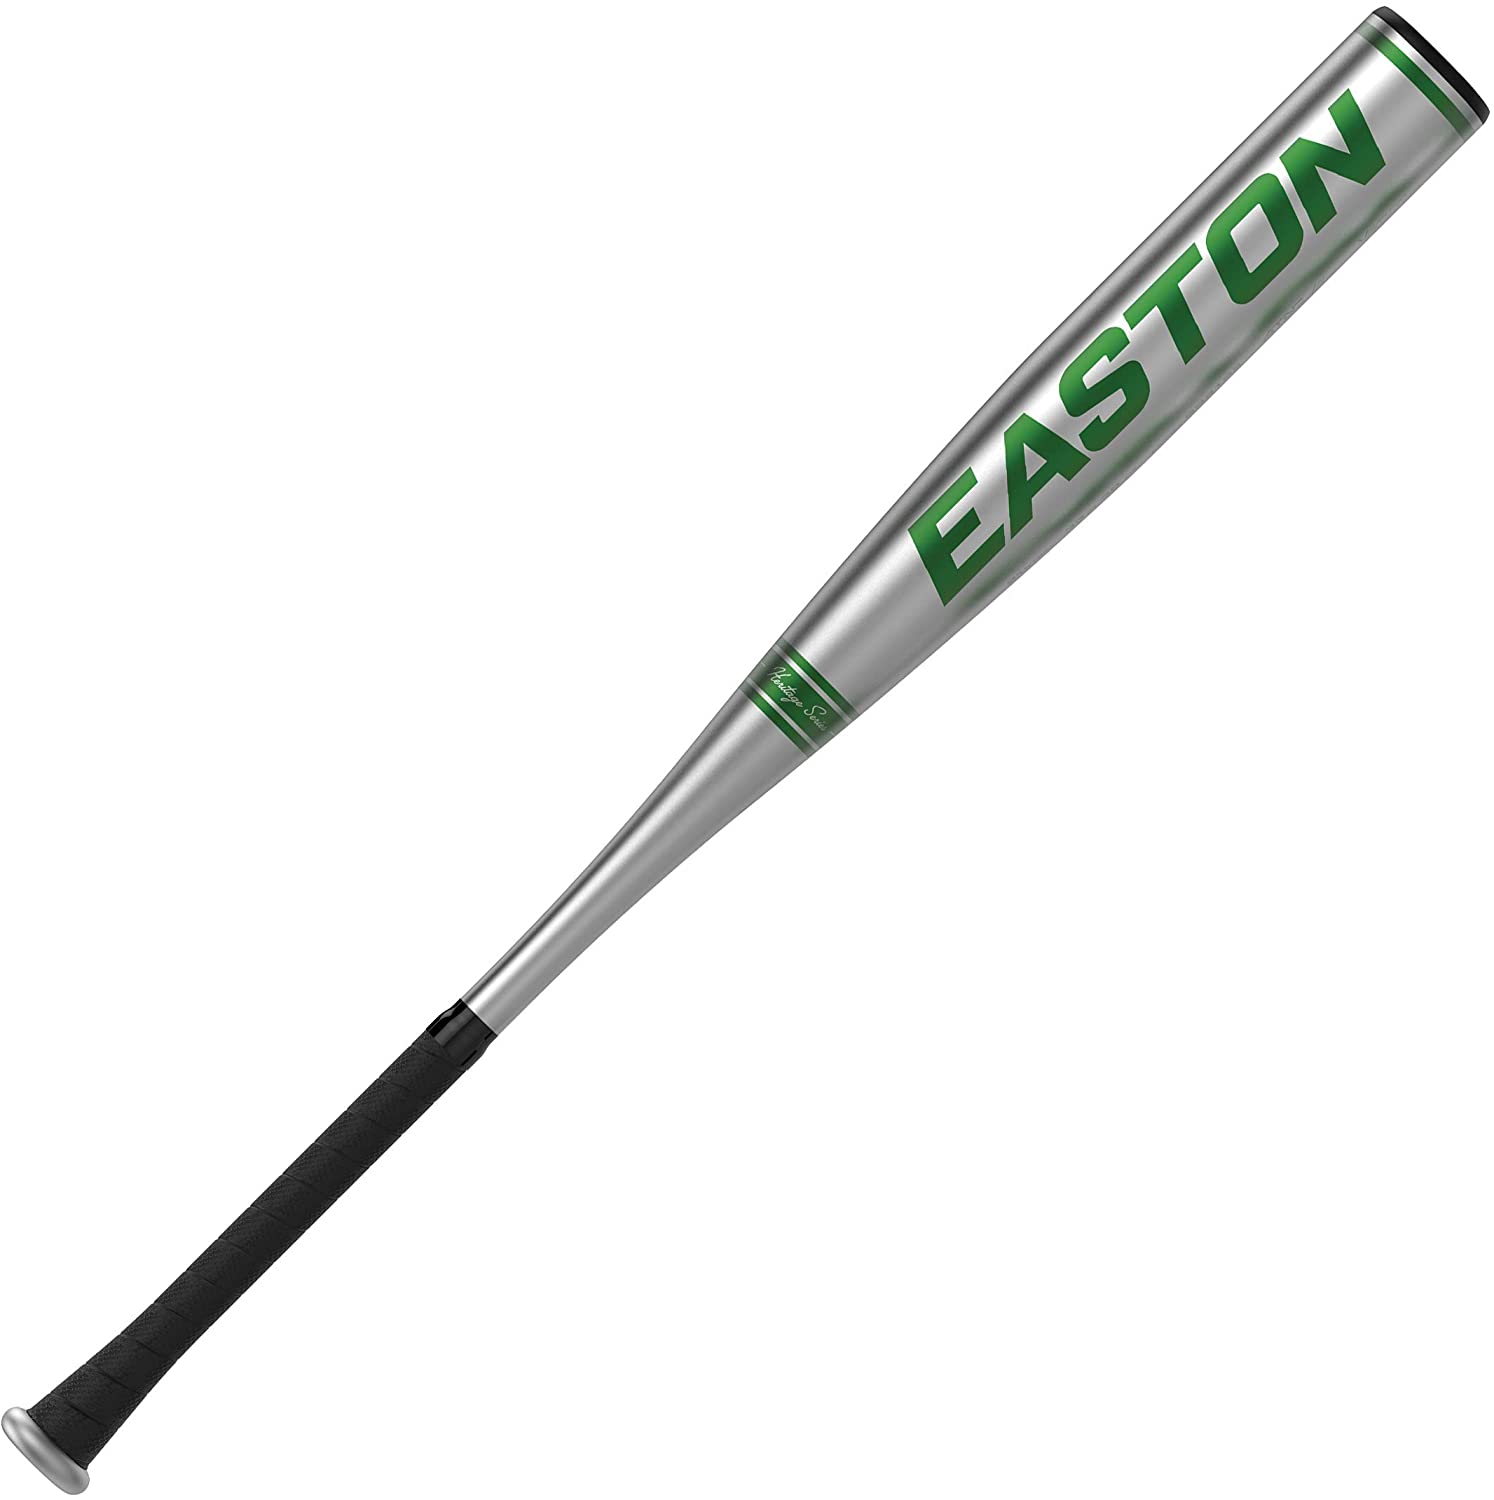 easton-b5-pro-big-barrel-3-bbcor-baseball-bat-33-inch-30-oz BB21B5-3330 Easton  THE GREEN EASTON IS BACK! First introduced in 1978 the original